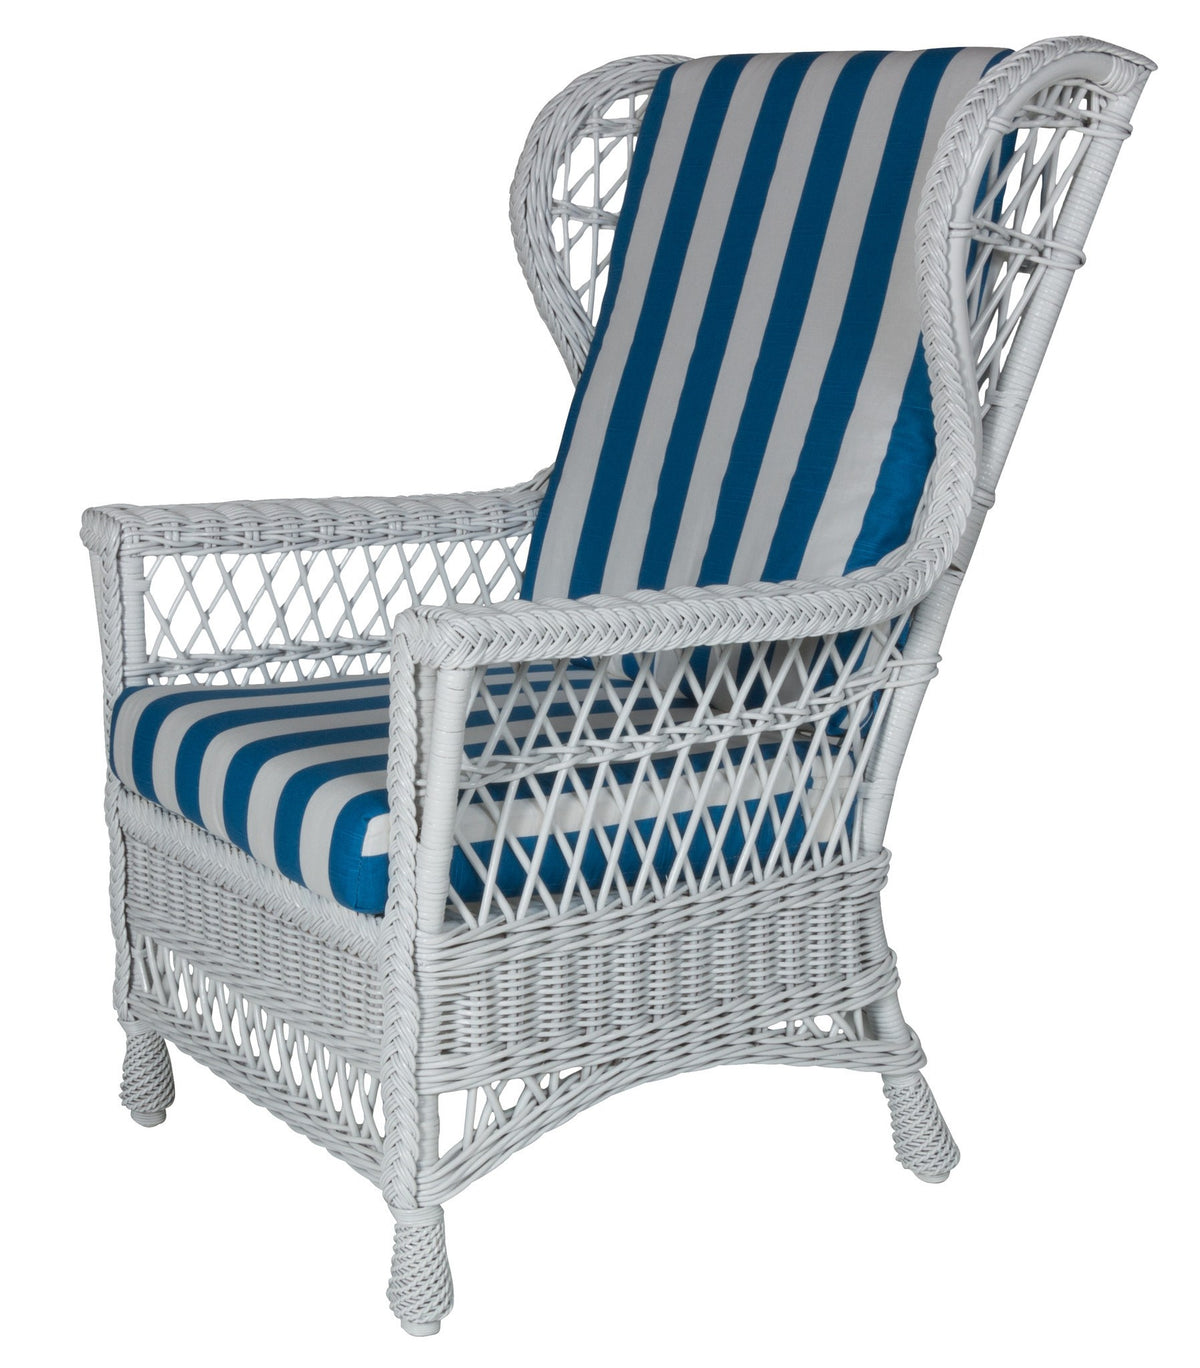 Designer Wicker &amp; Rattan By Tribor Harbor Front Wing Chair by Designer Wicker from Tribor Chair - Rattan Imports